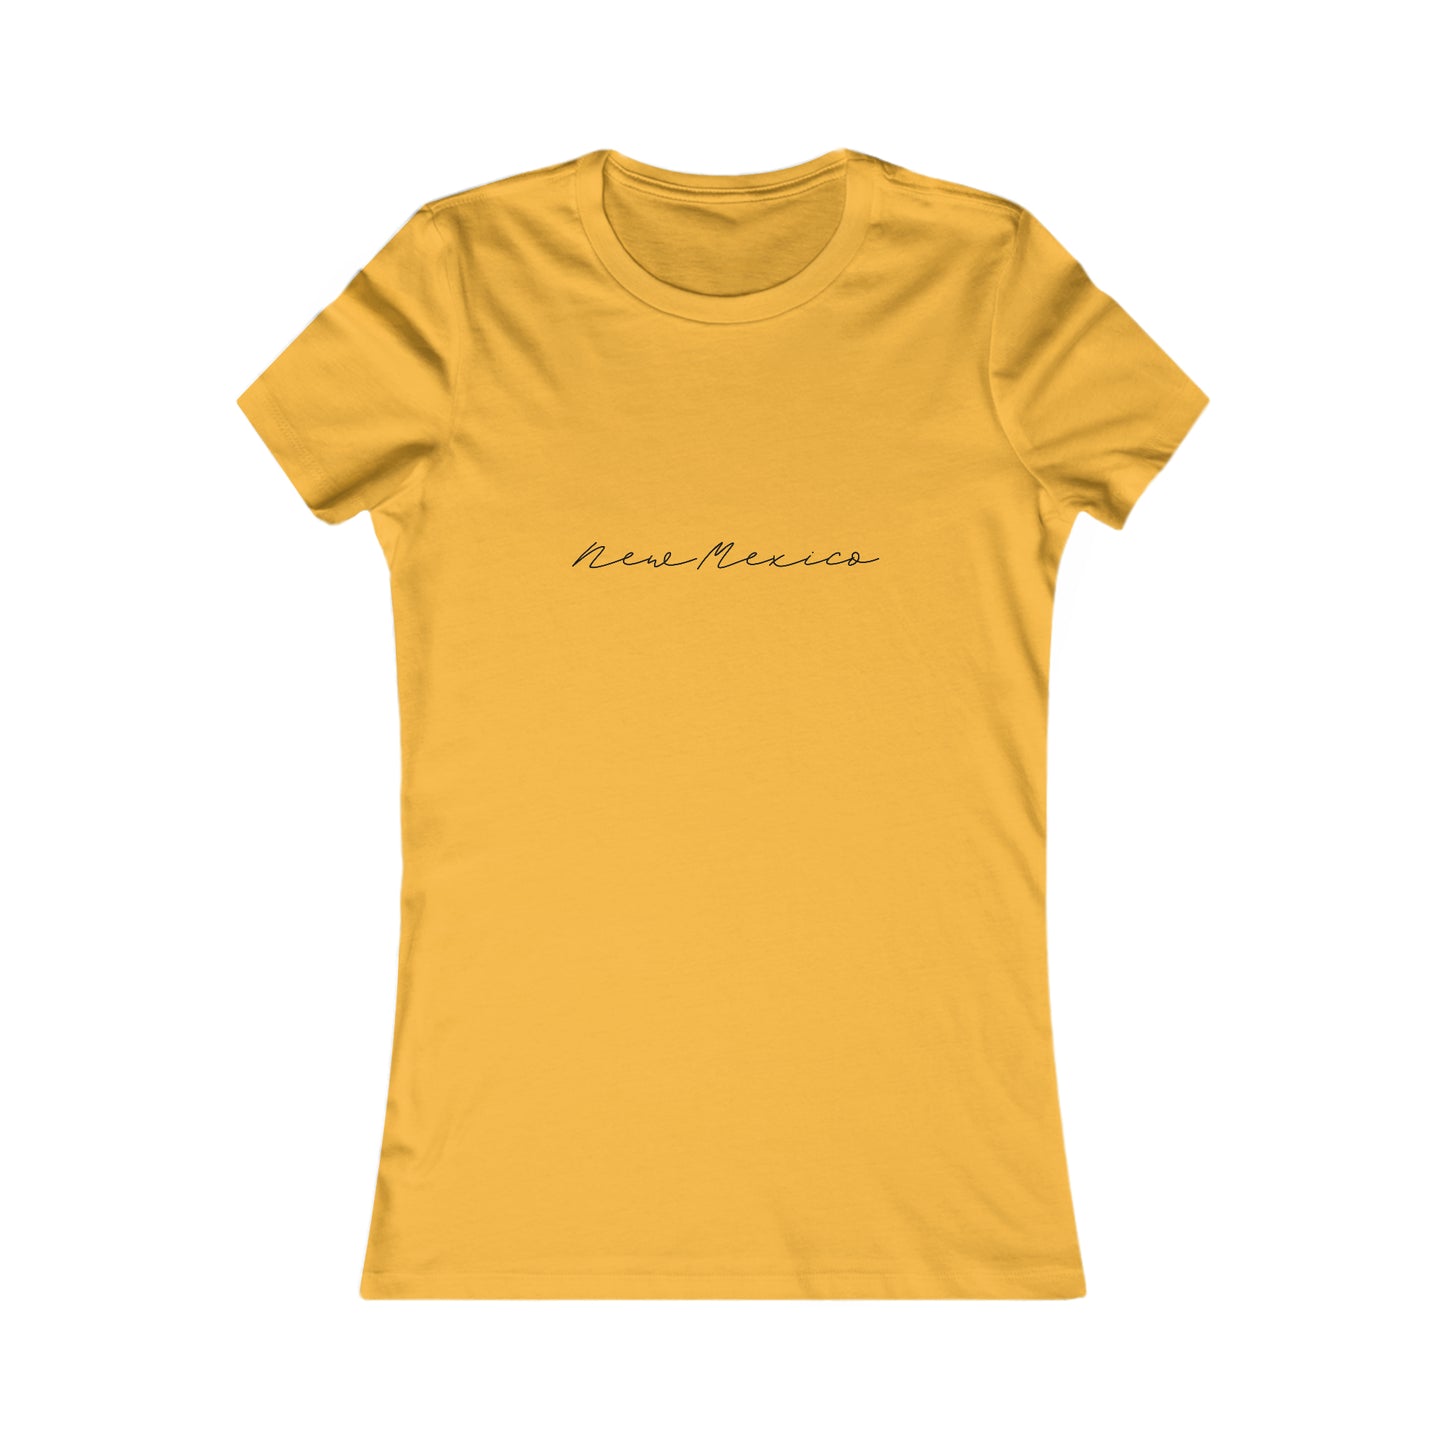 New Mexico Cursive Women's Shirt